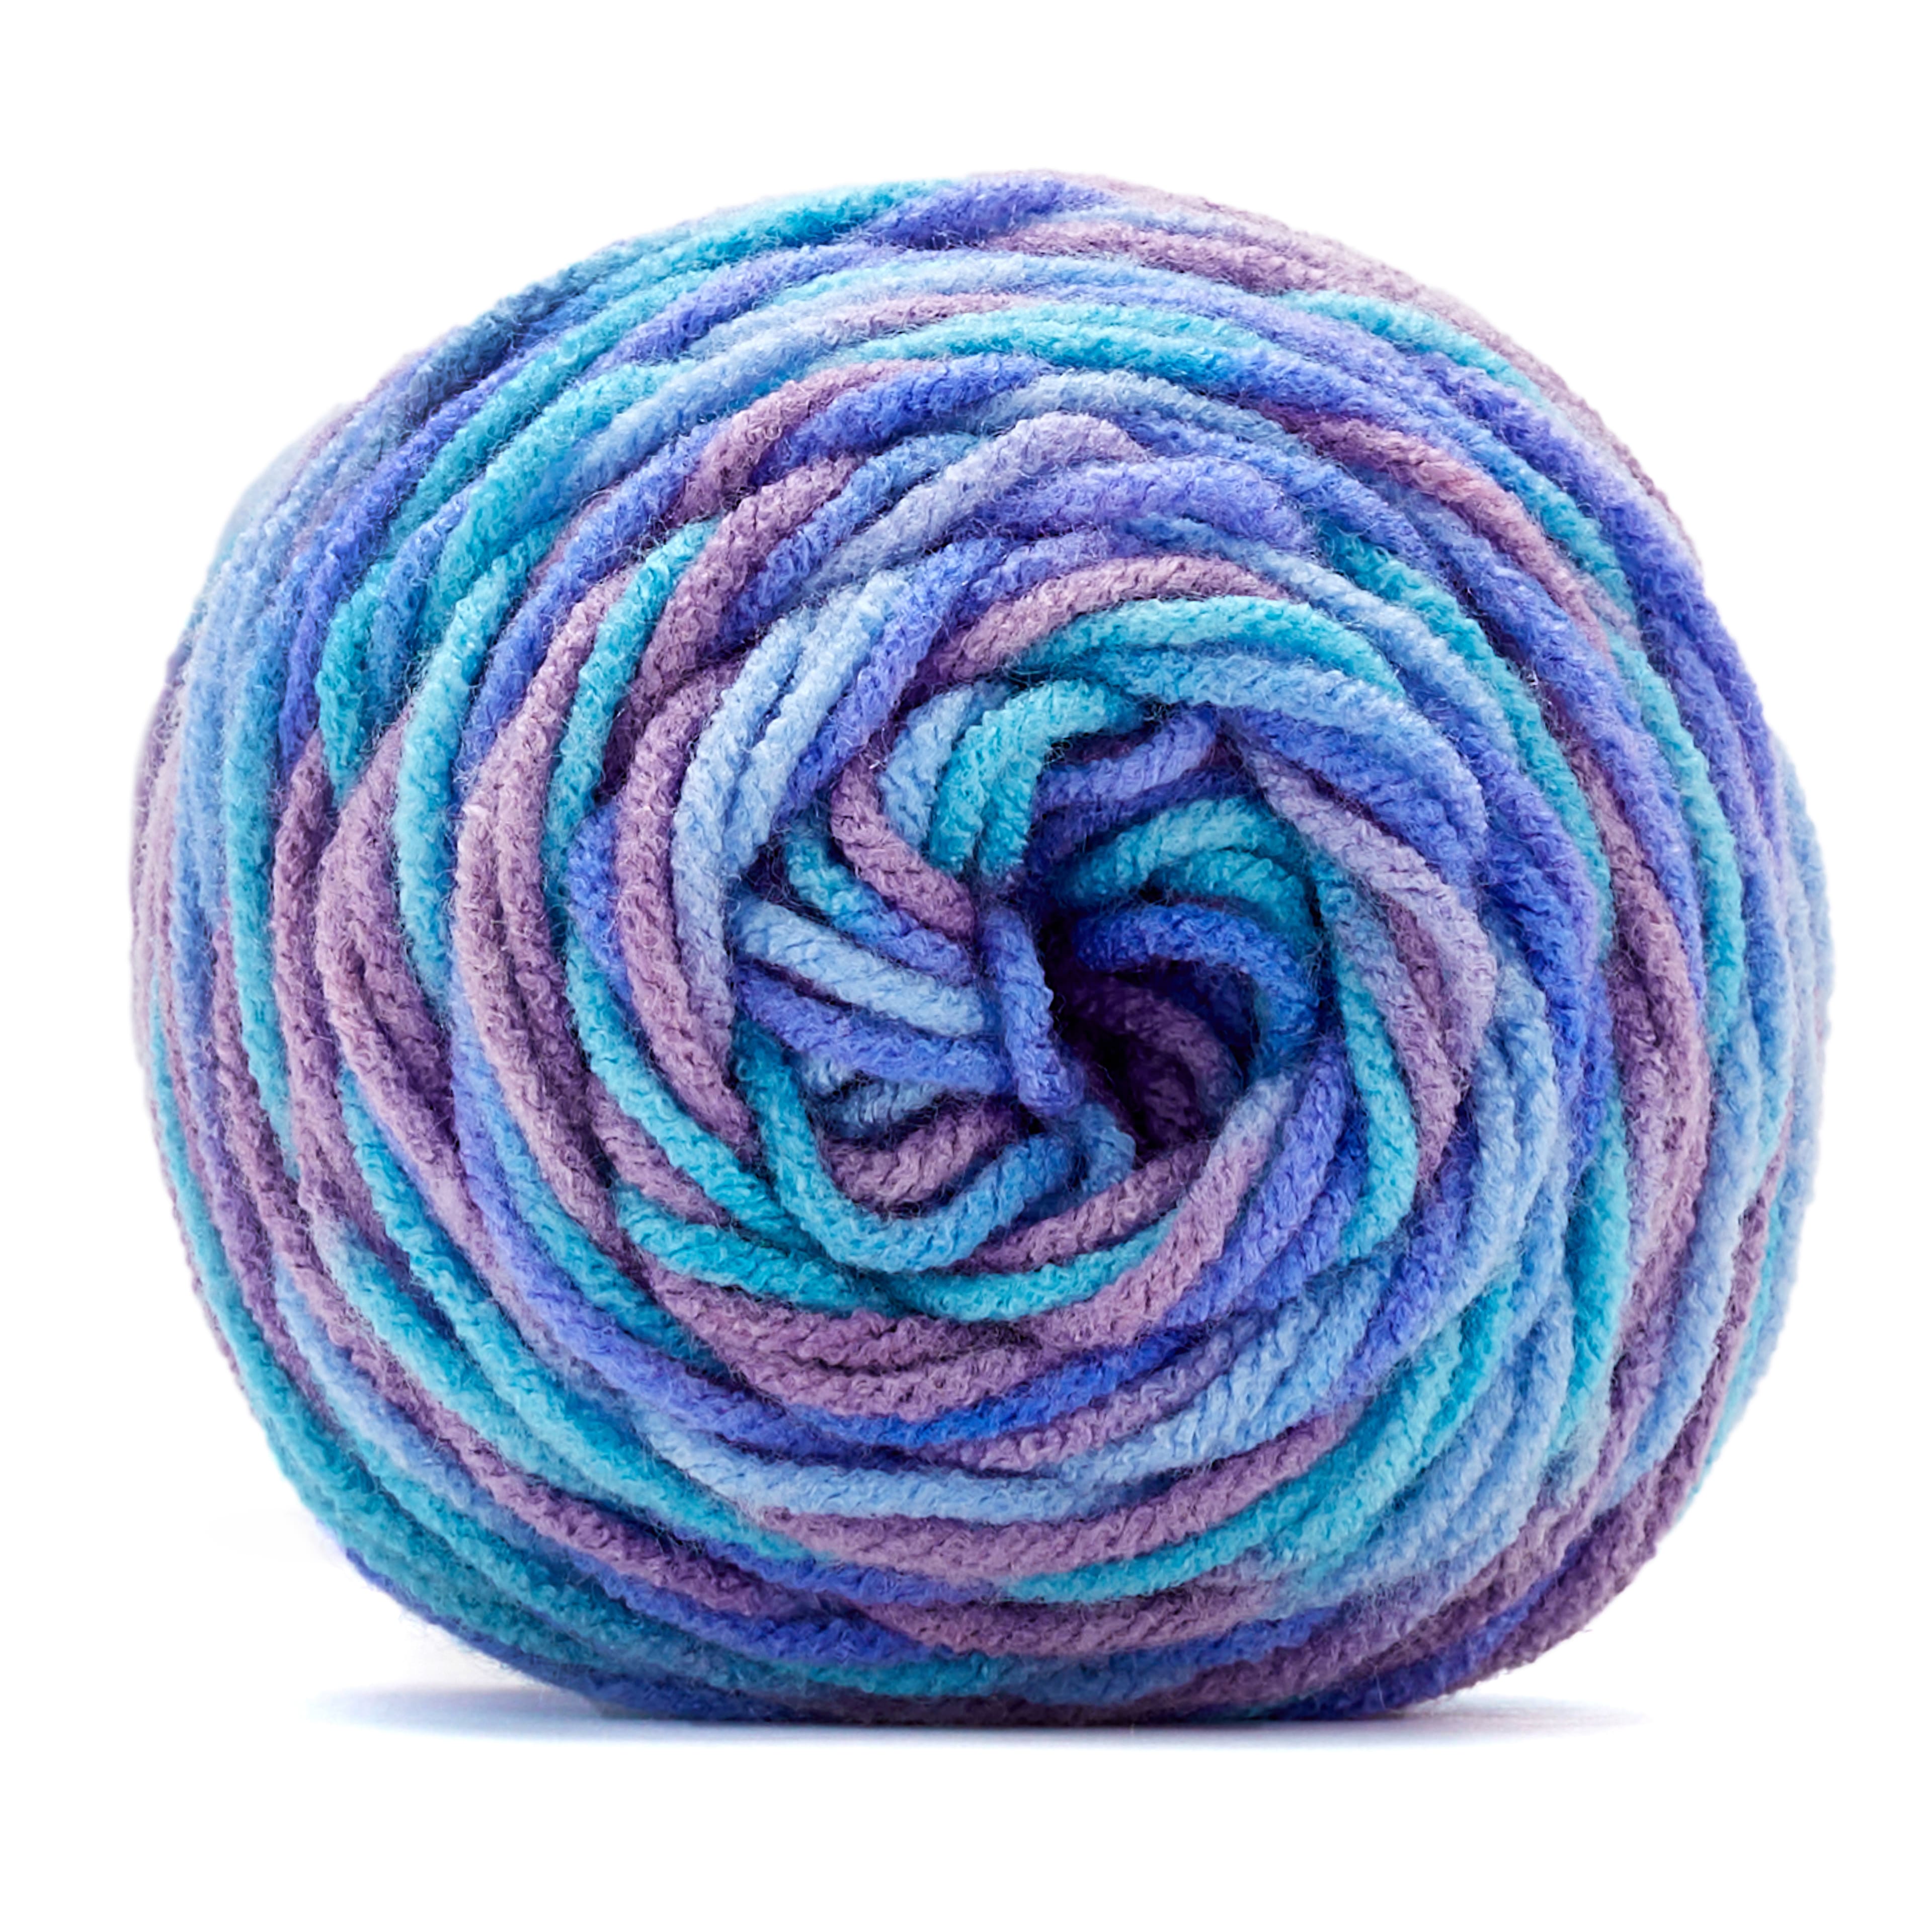 Soft Classic Multi Yarn by Loops & Threads - Multicolor Yarn for